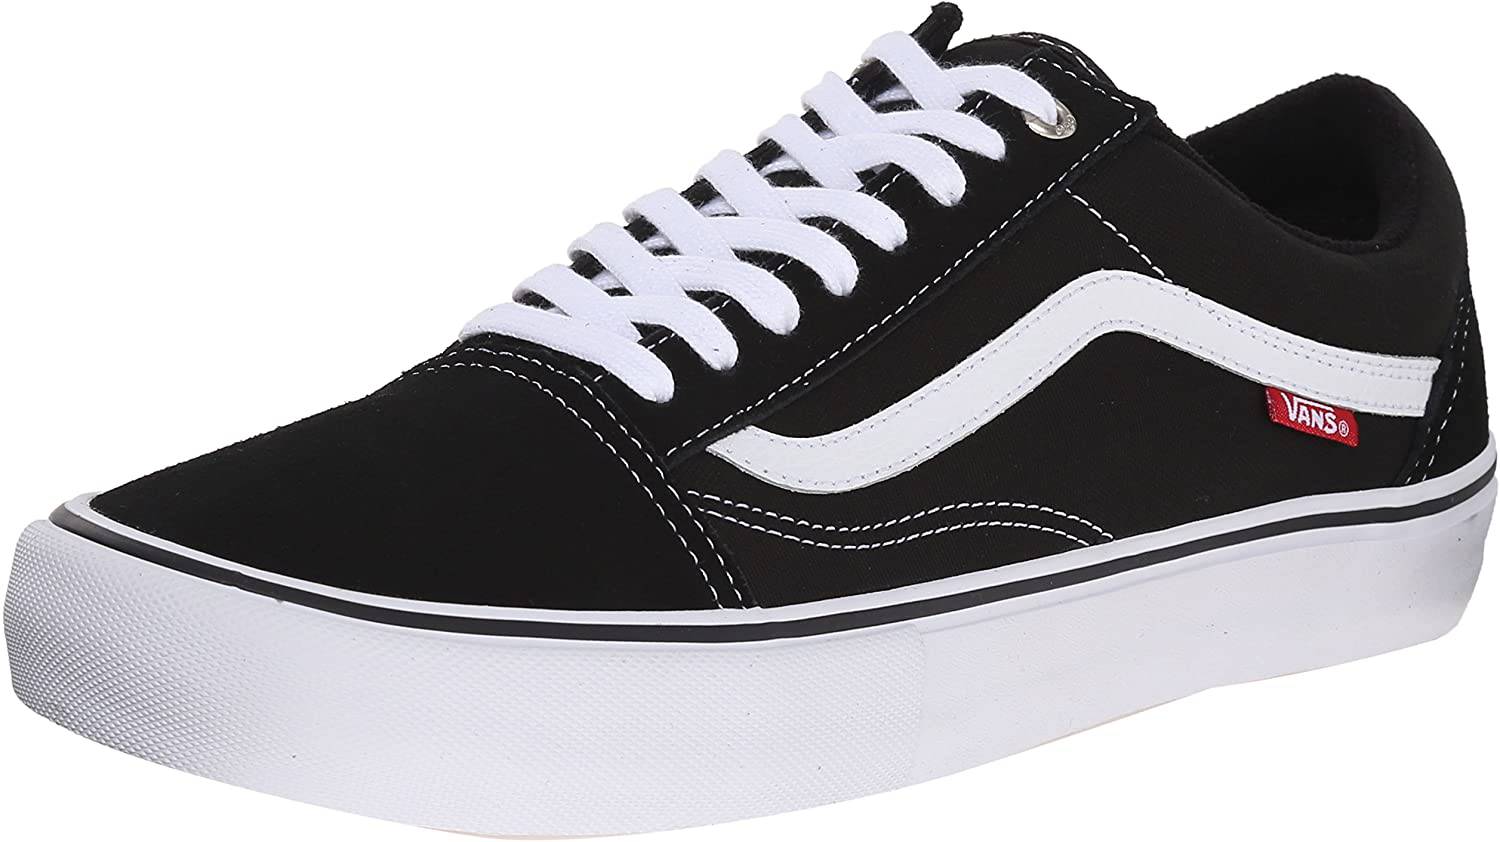 Vans Old Skool Shoe in Black and White – M I L O S P O R T